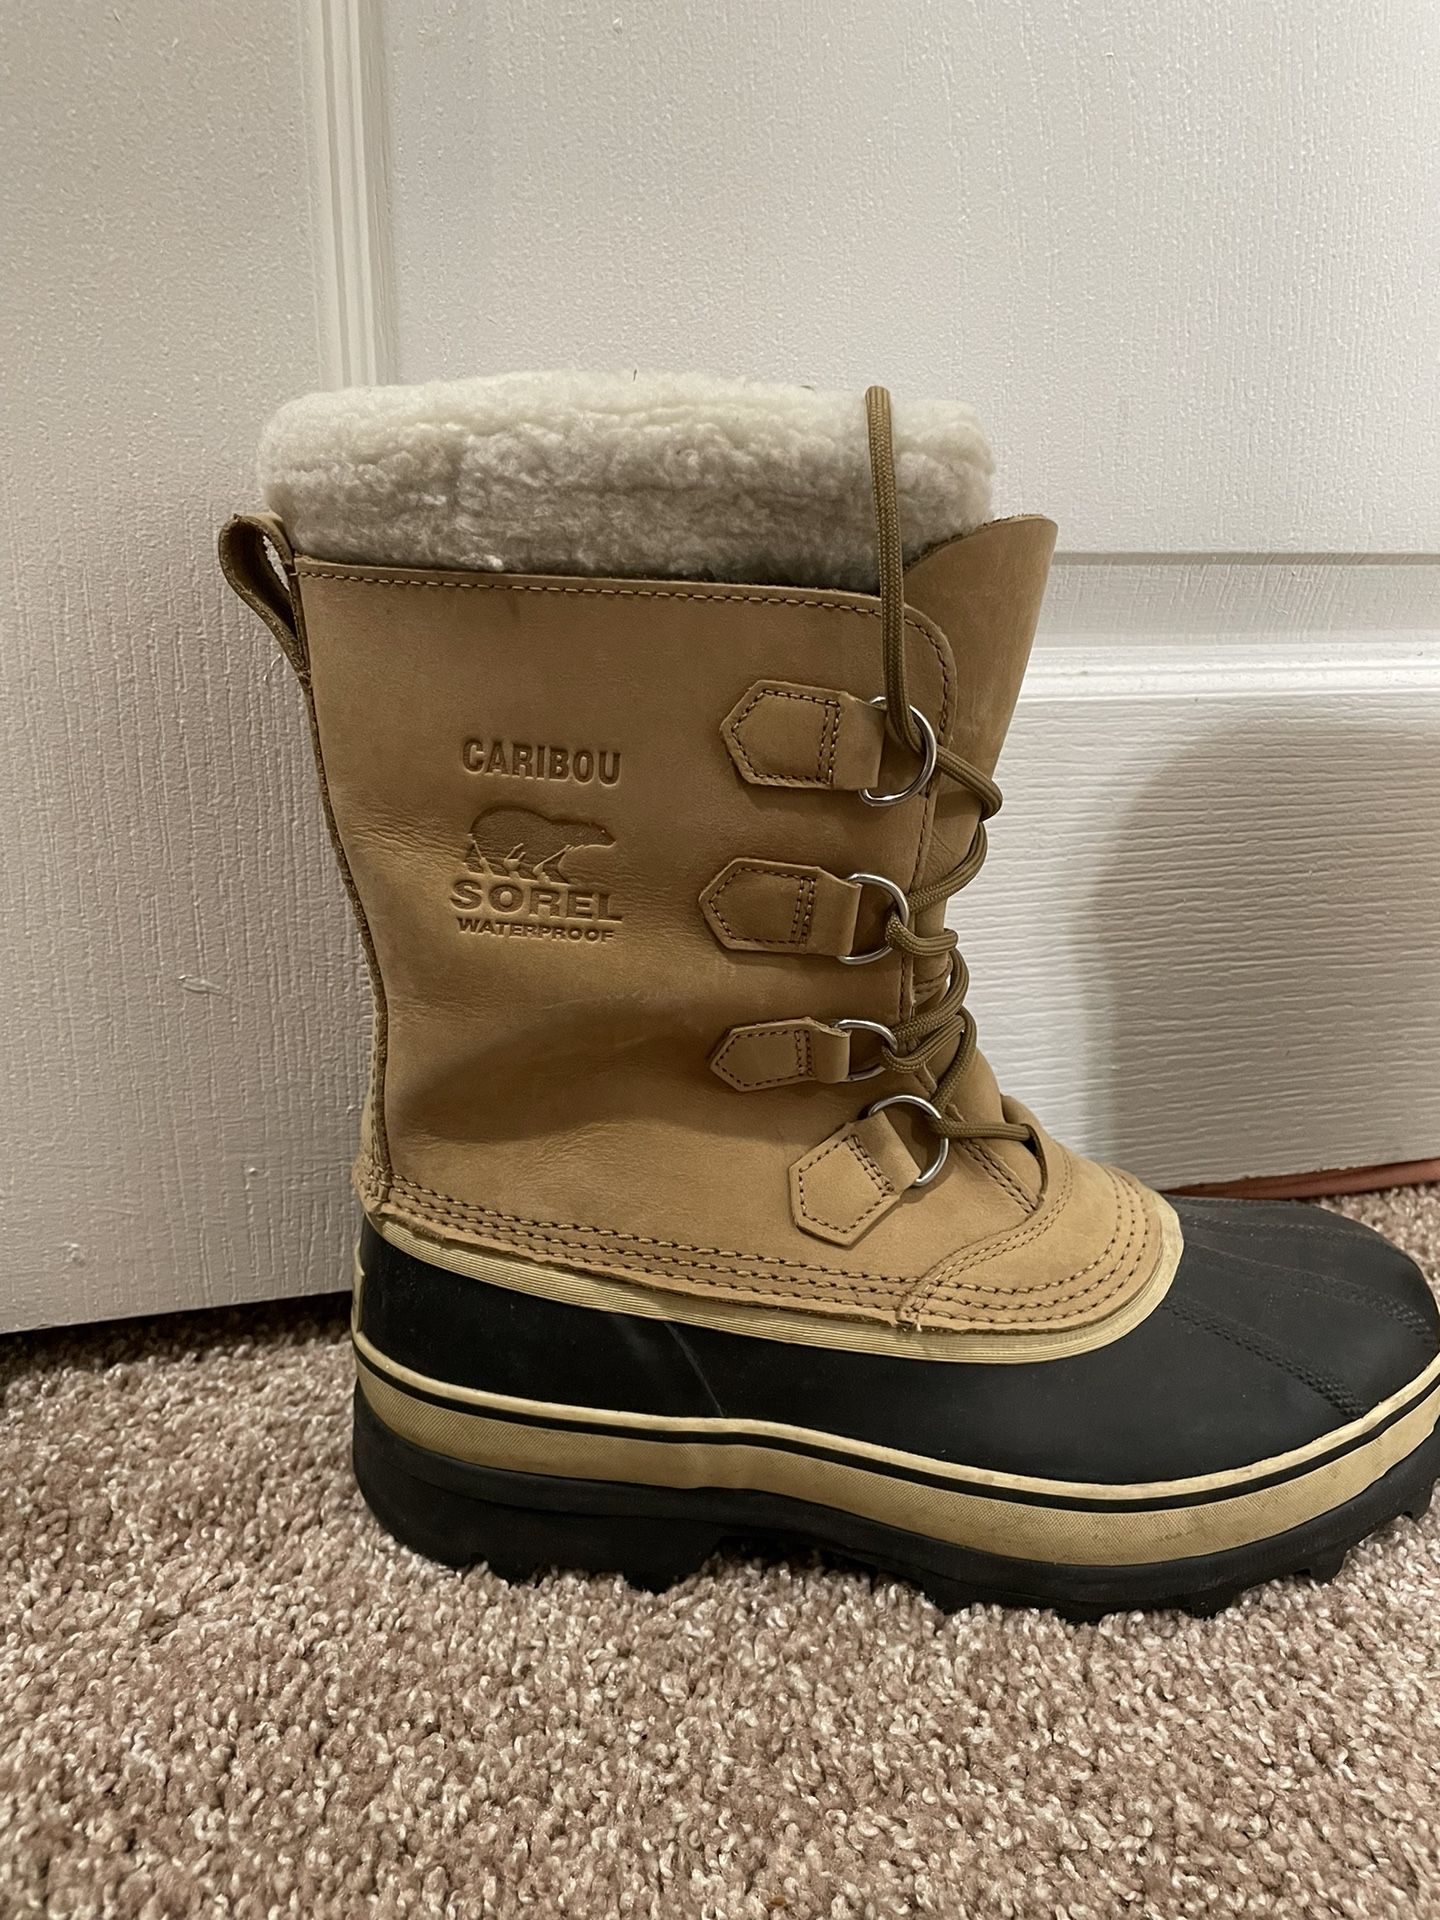 Sorel Women’s Snow Boots - size 10.5